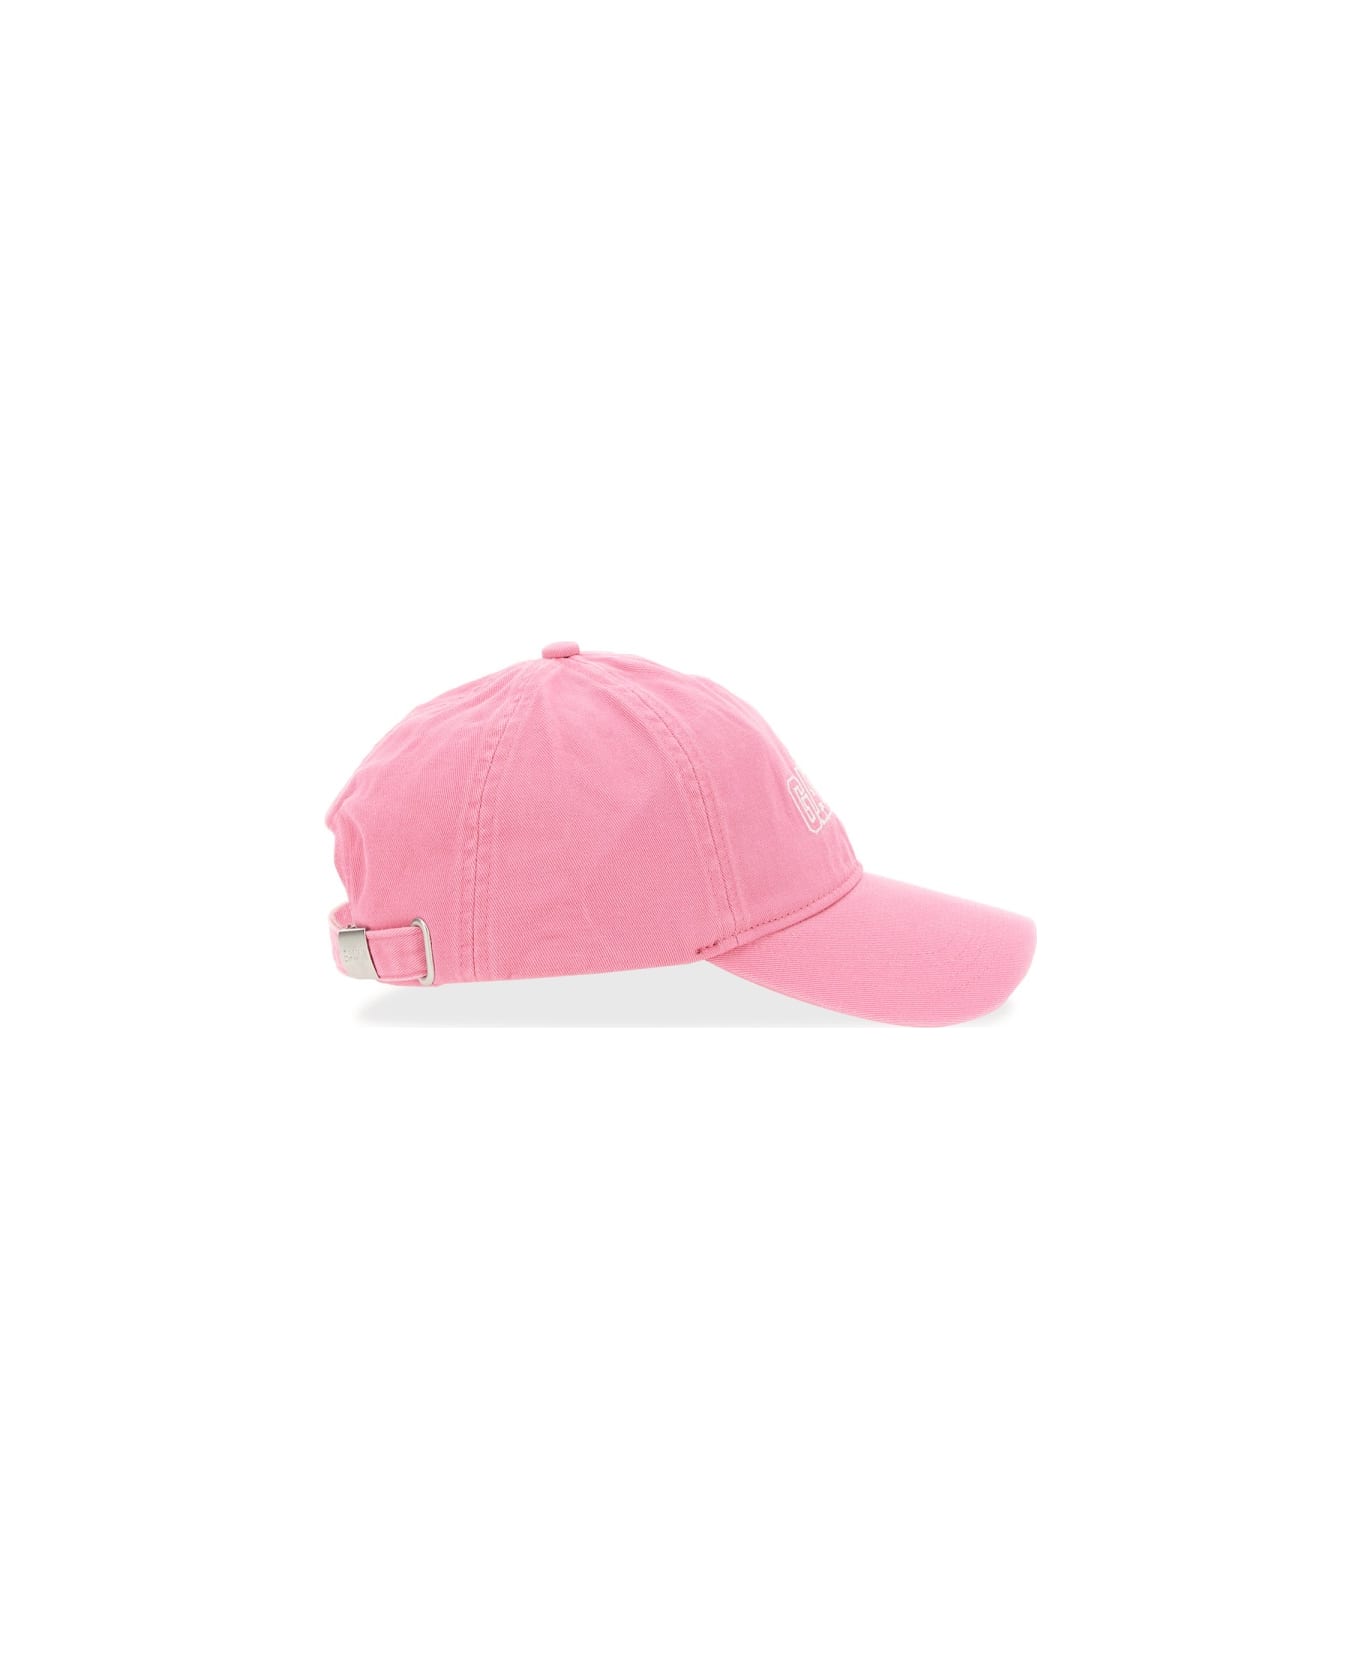 Ganni Baseball Cap - Pink 帽子